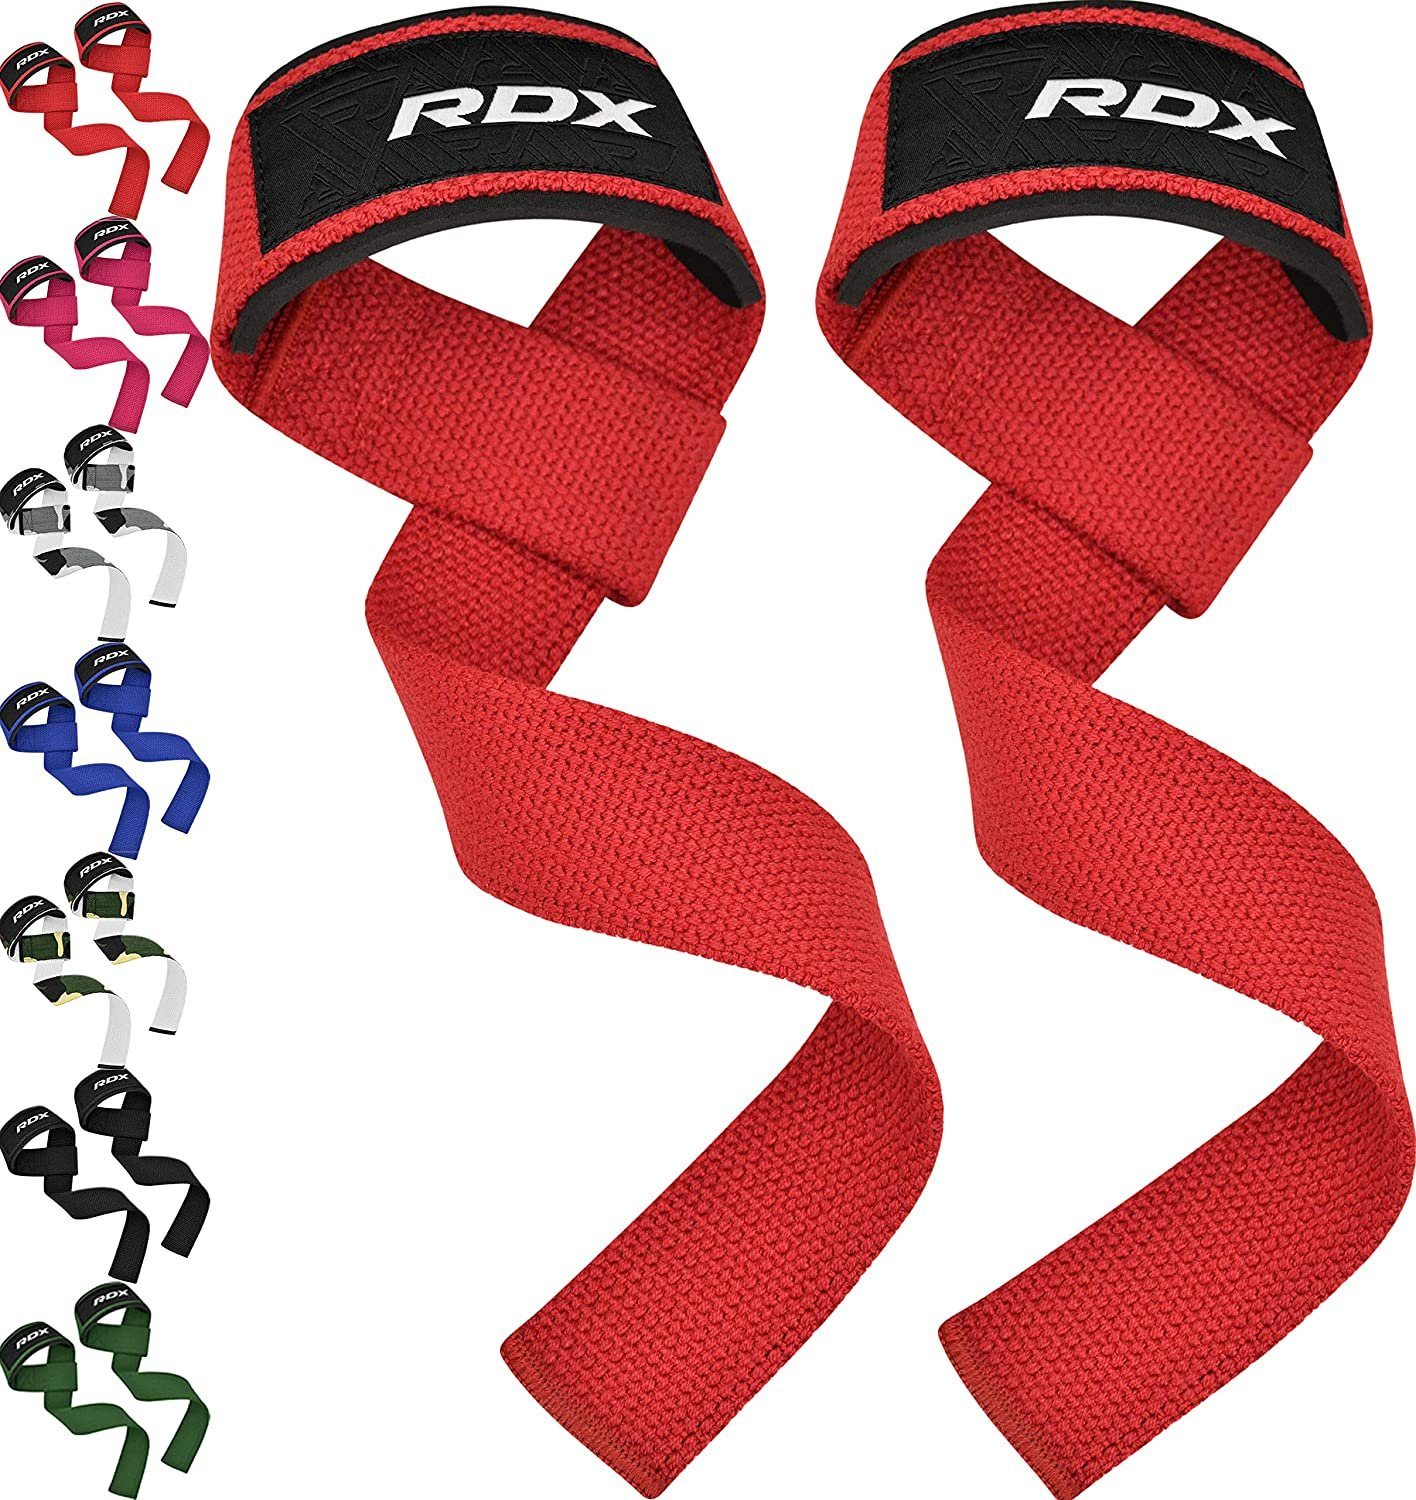 RDX Handgelenkschutz RDX Lifting Straps Strength Training, 60 cm lange professionelle Red Black